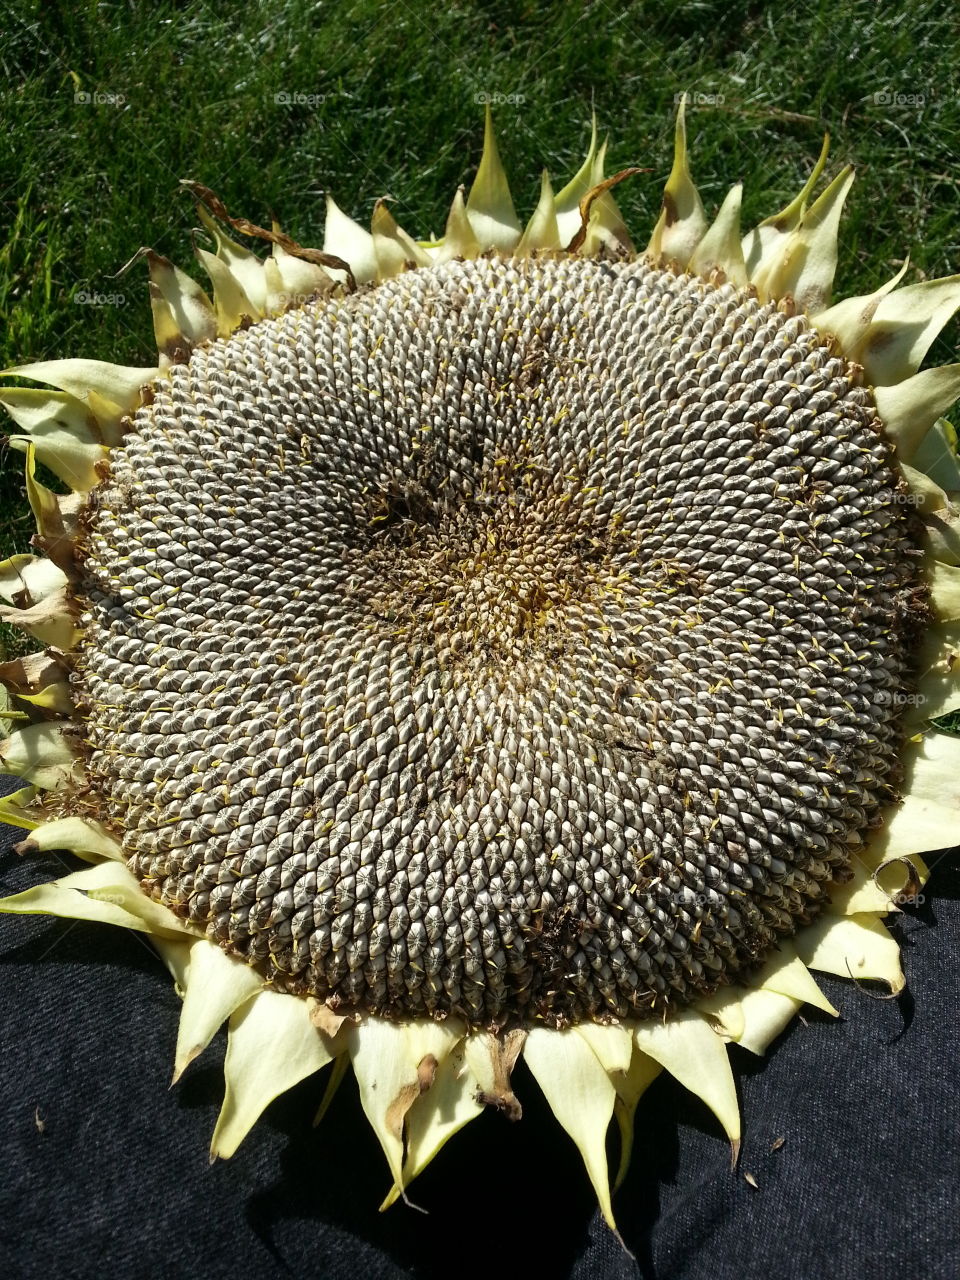 bursting with seeds